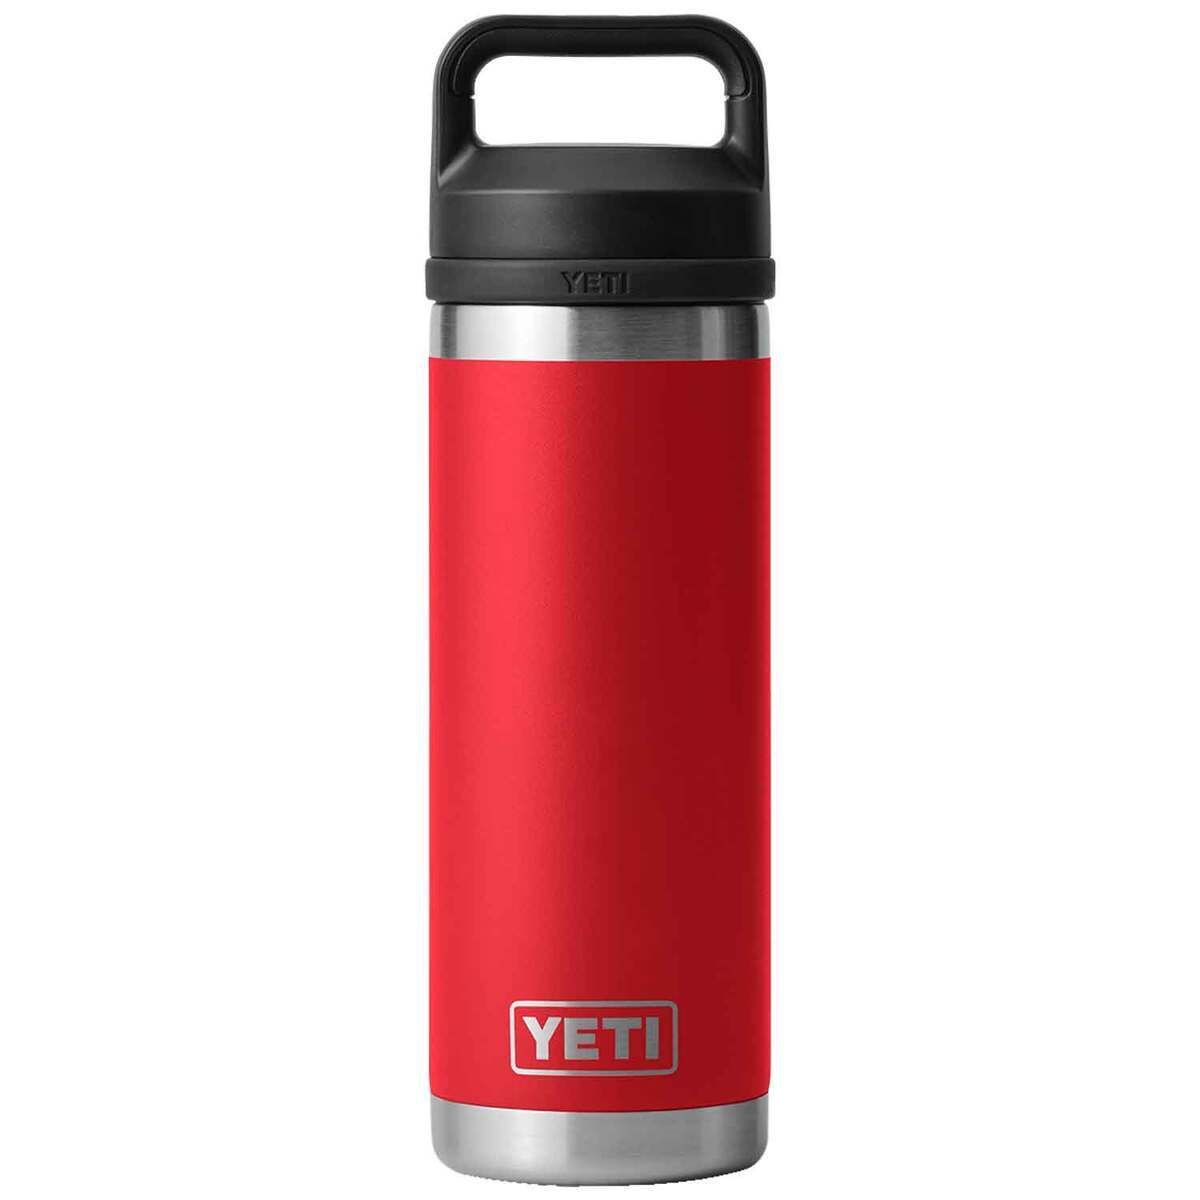 https://www.sportsmans.com/medias/yeti-rambler-18oz-insulated-bottle-with-chug-cap-rescue-red-1797989-1.jpg?context=bWFzdGVyfGltYWdlc3wyOTMzNHxpbWFnZS9qcGVnfGhiZS9oNzkvMTEzMDEwNzY5OTIwMzAvMTIwMC1jb252ZXJzaW9uRm9ybWF0X2Jhc2UtY29udmVyc2lvbkZvcm1hdF9zbXctMTc5Nzk4OS0xLmpwZ3xhN2IyMzE5ZGM1ZmNmMzZlZTk0N2IzMDI1Njk2NGNjMzBiOGQ2ODViMzZhNmExOTBiZTRlMDM2YTcxMzU4YWJi